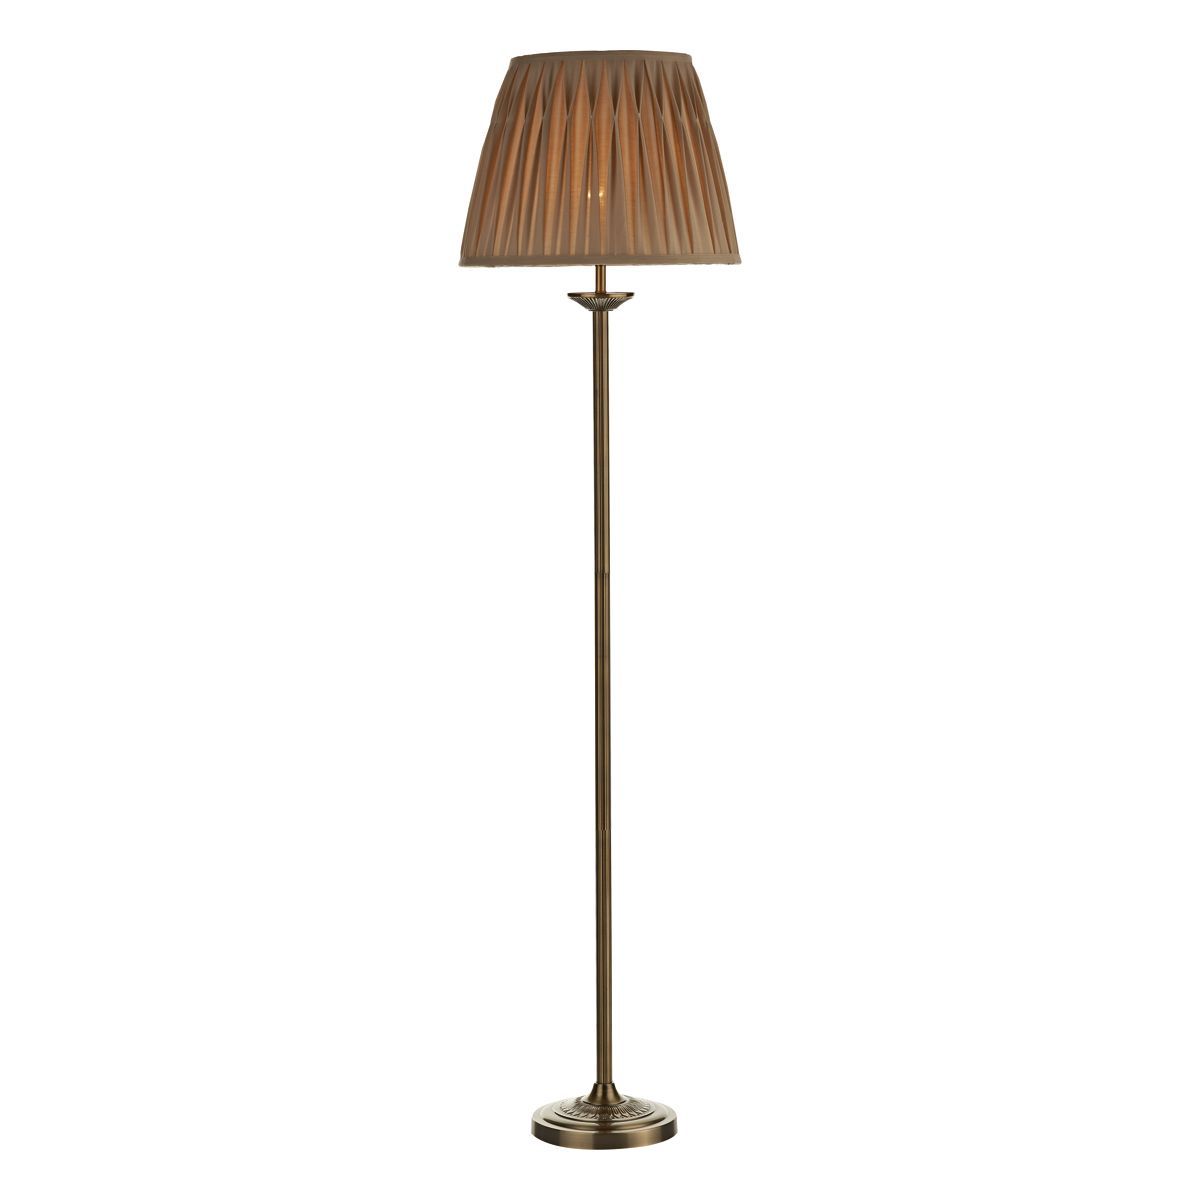 Hatton Floor Lamp Antique Brass Complete With Shade Within Antique Brass Floor Lamps (View 11 of 15)